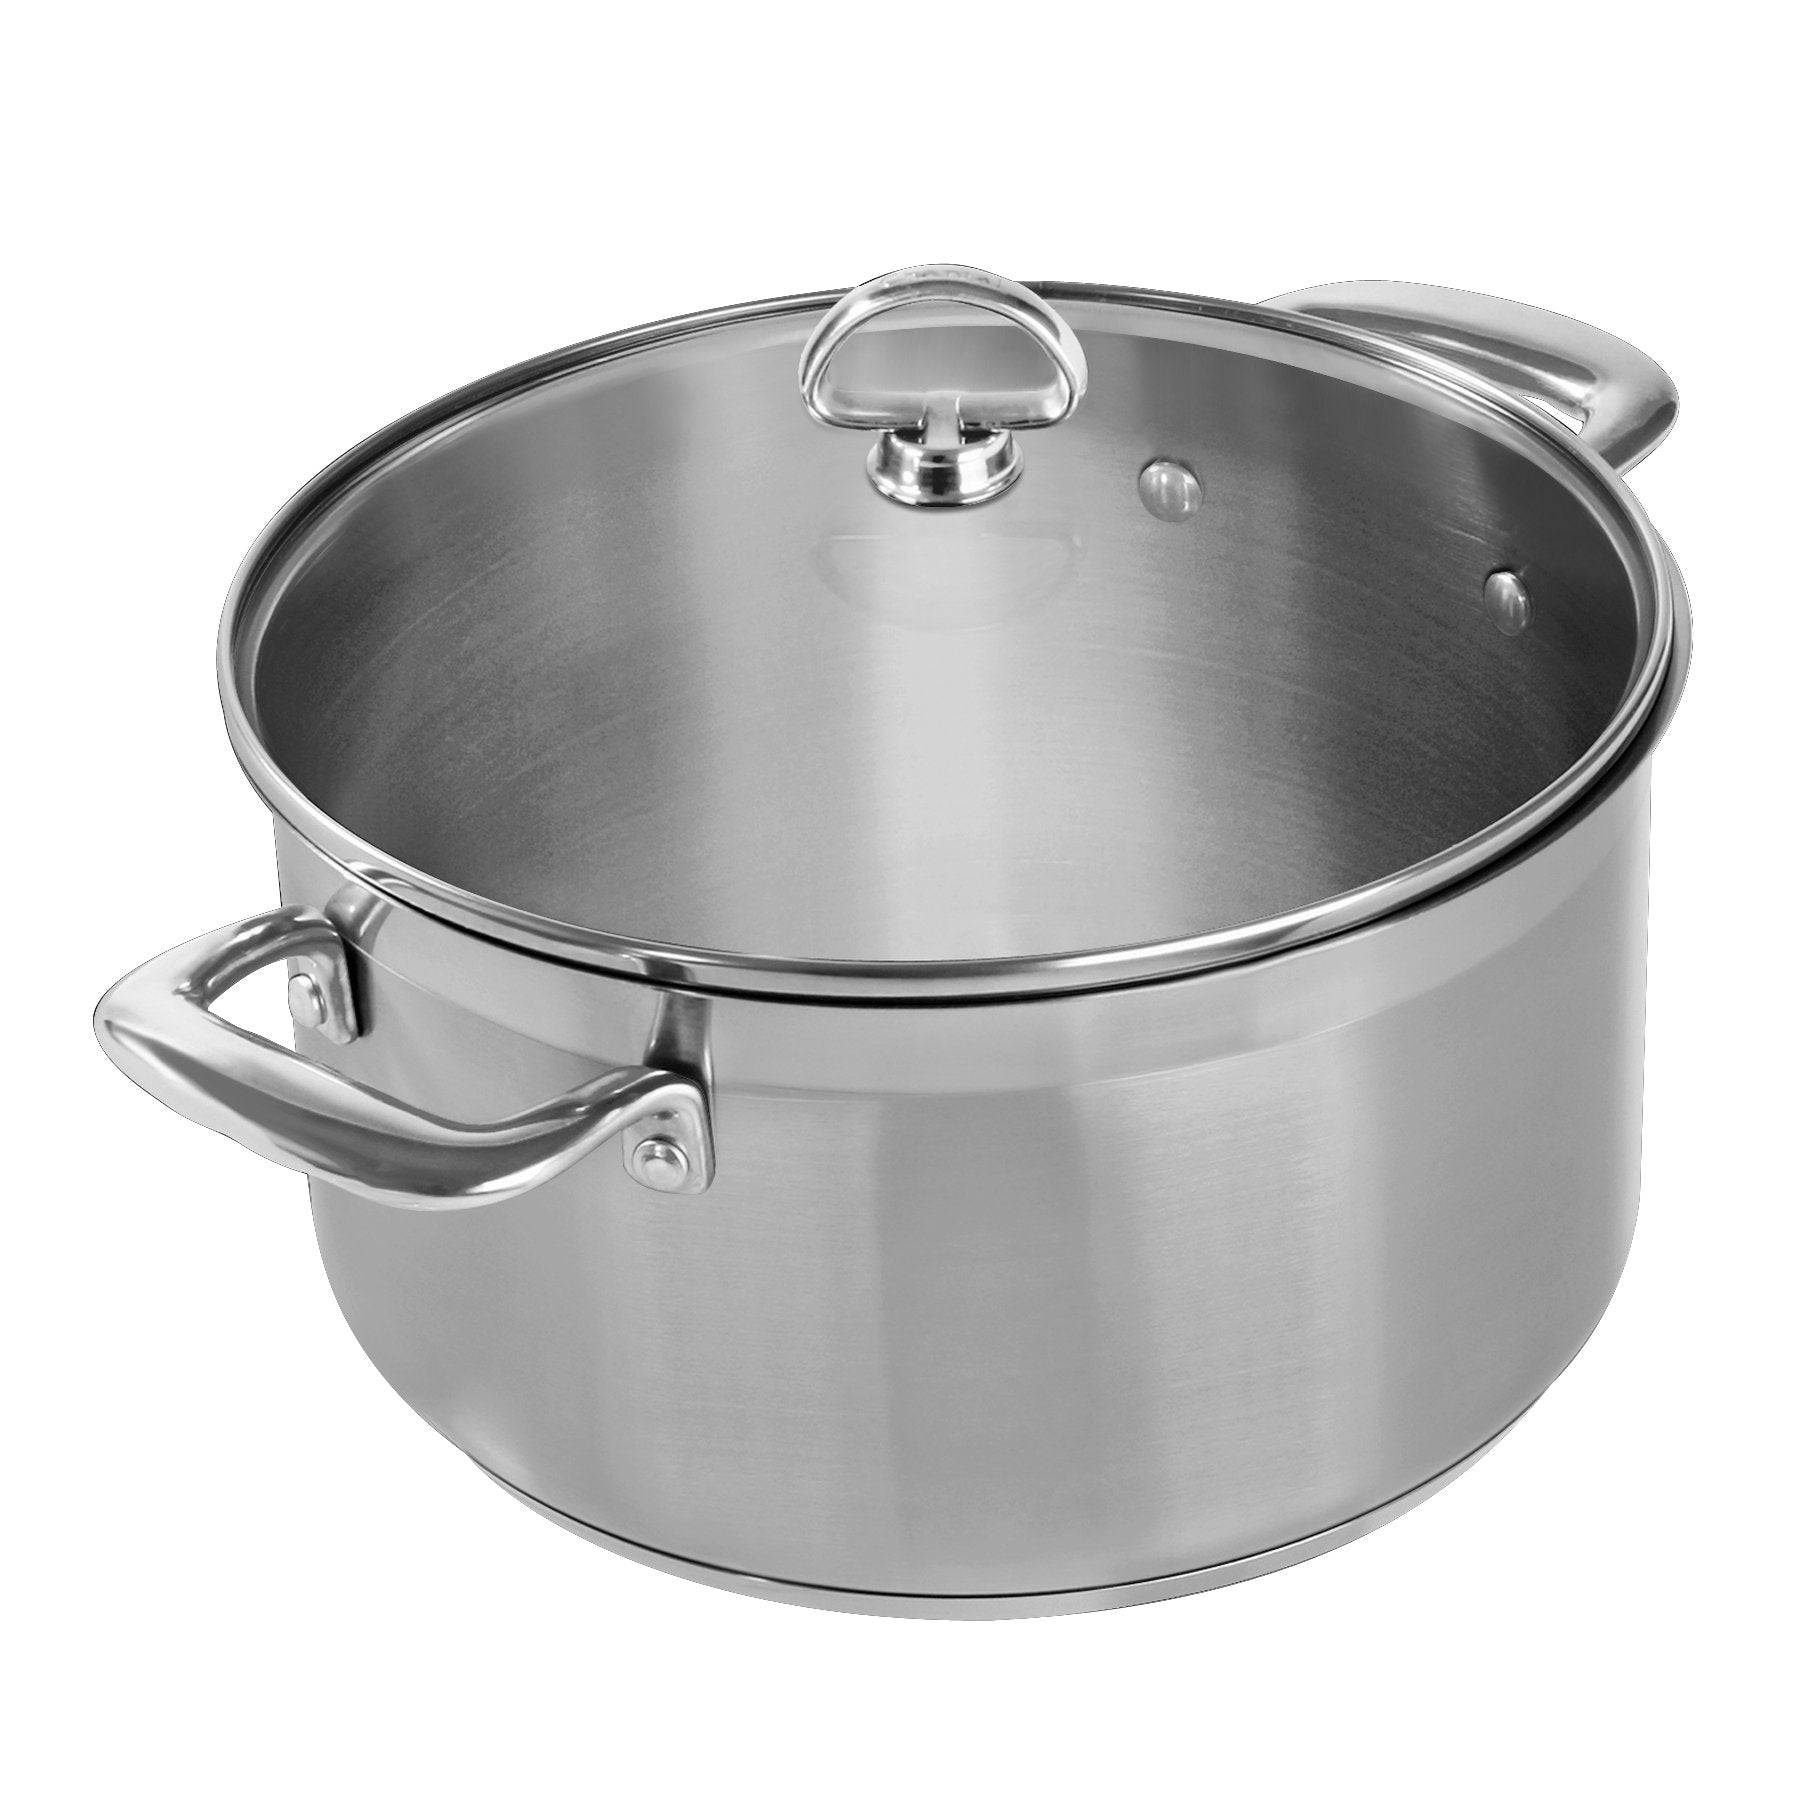 de BUYER Affinity induction casserole / lid, stainless steel, Ø 20 cm, 11  cm high, 1 pc, carton